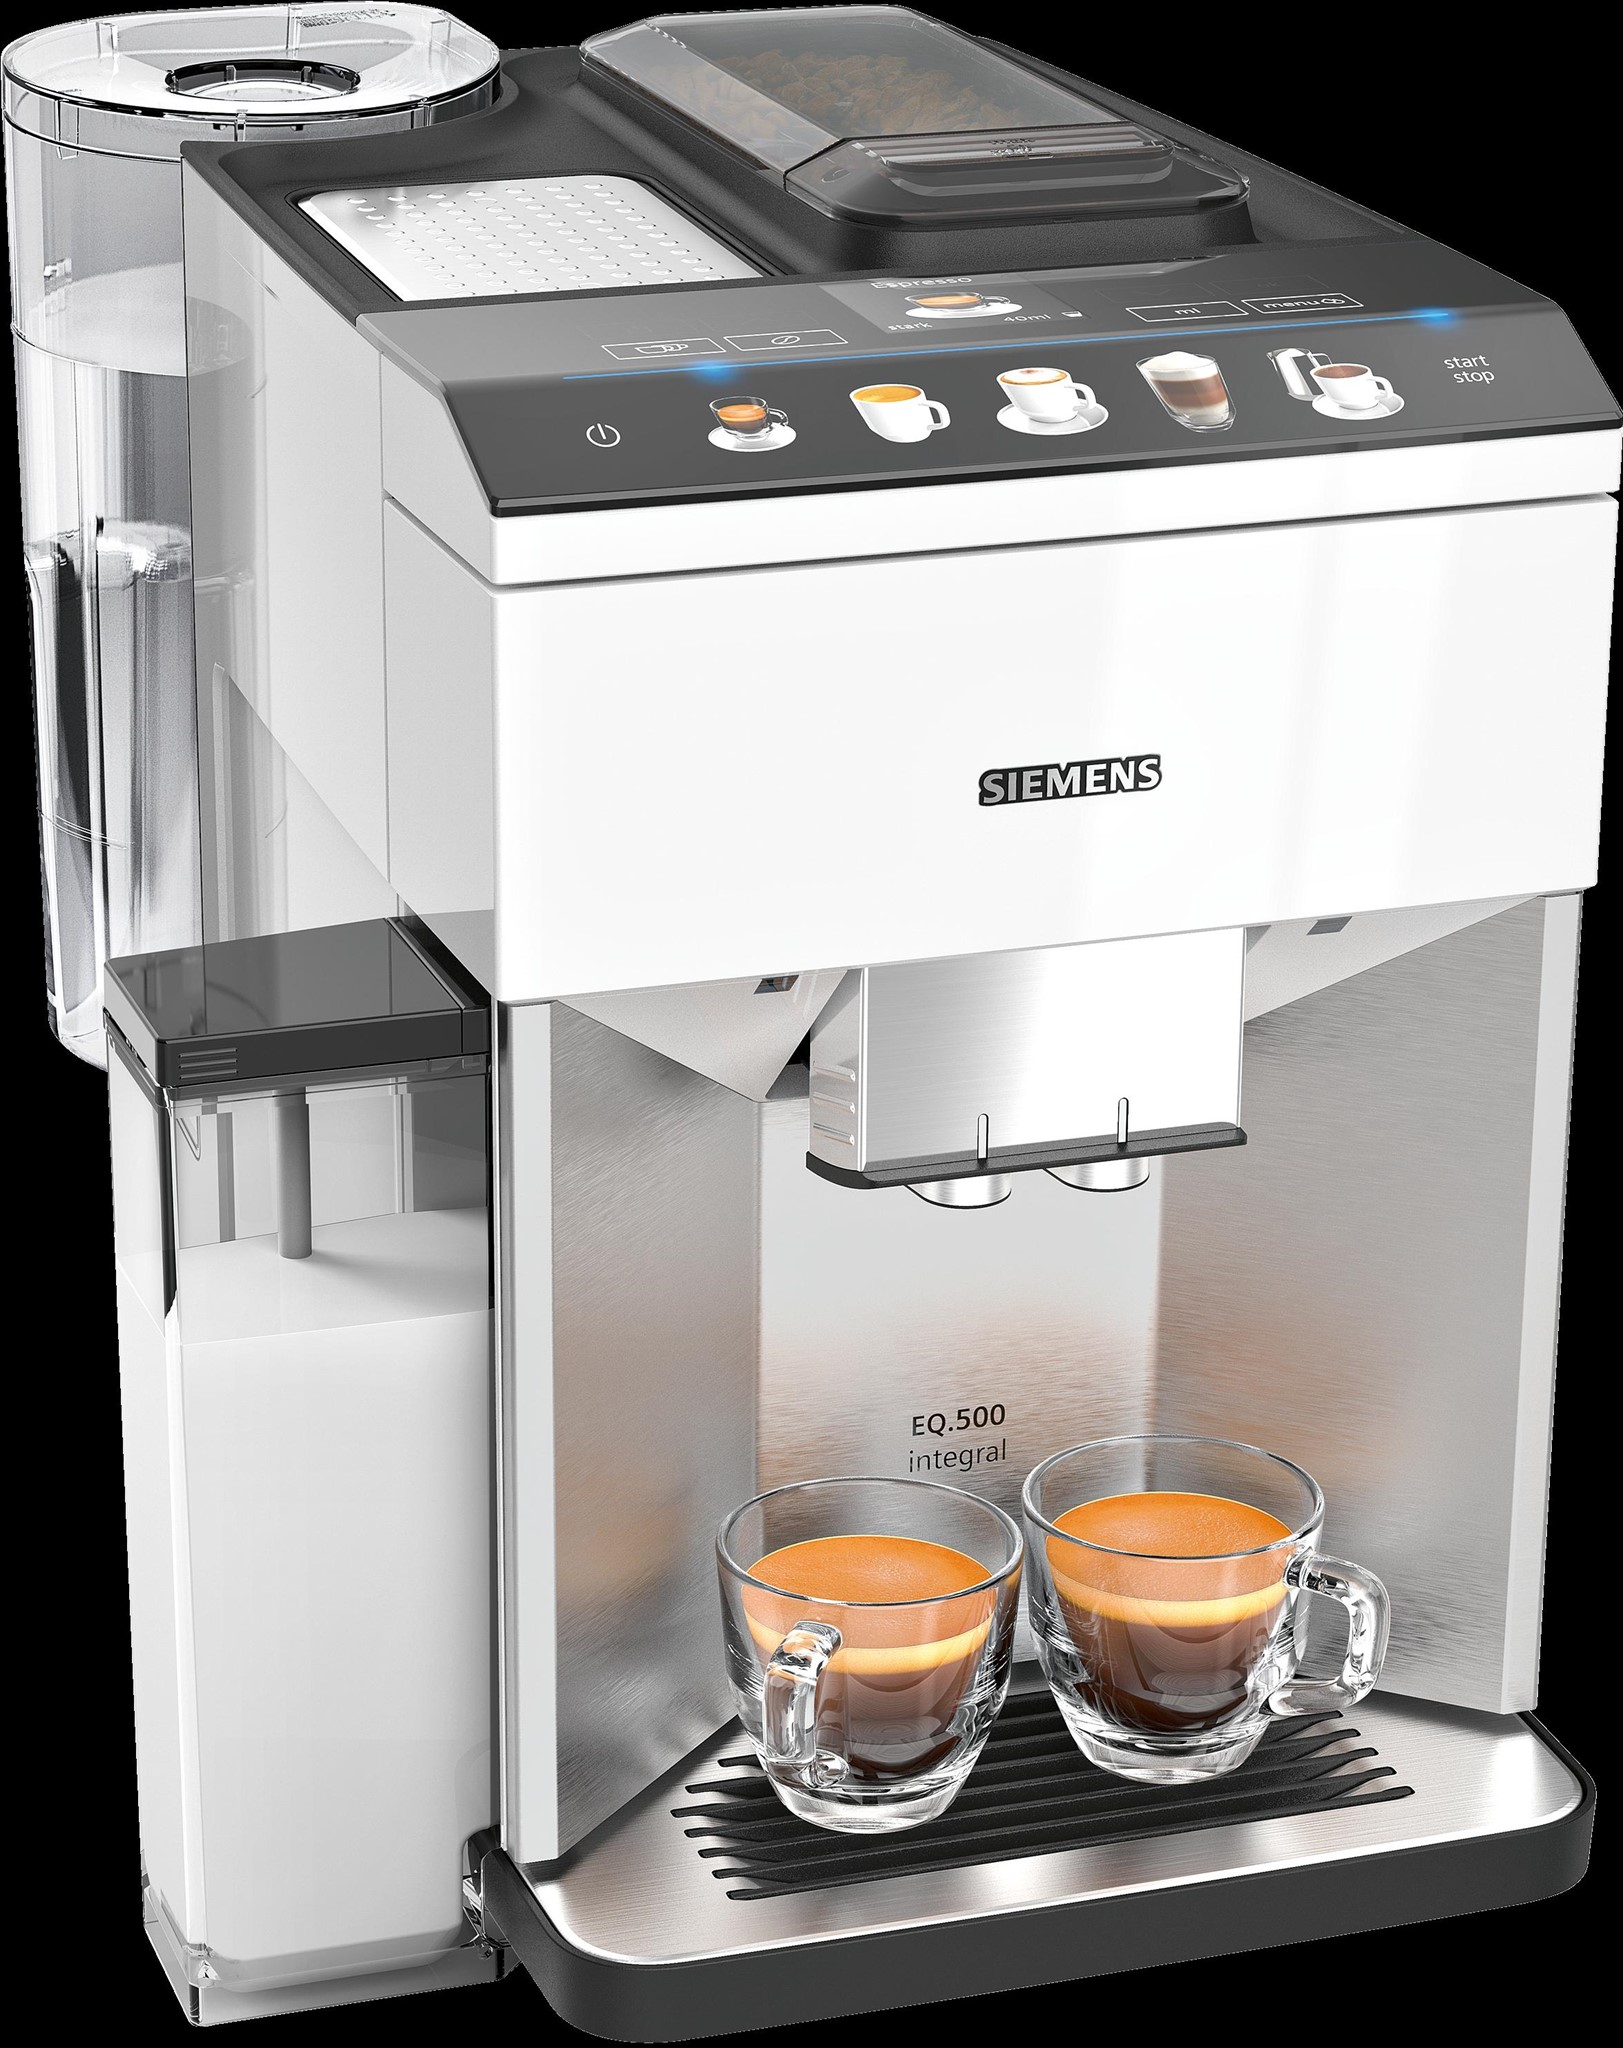 Siemens Kaffee-Vollautomat EQ.500 Edelstahl, integral GmbH TQ507D02, 4242003837467-Silvertech